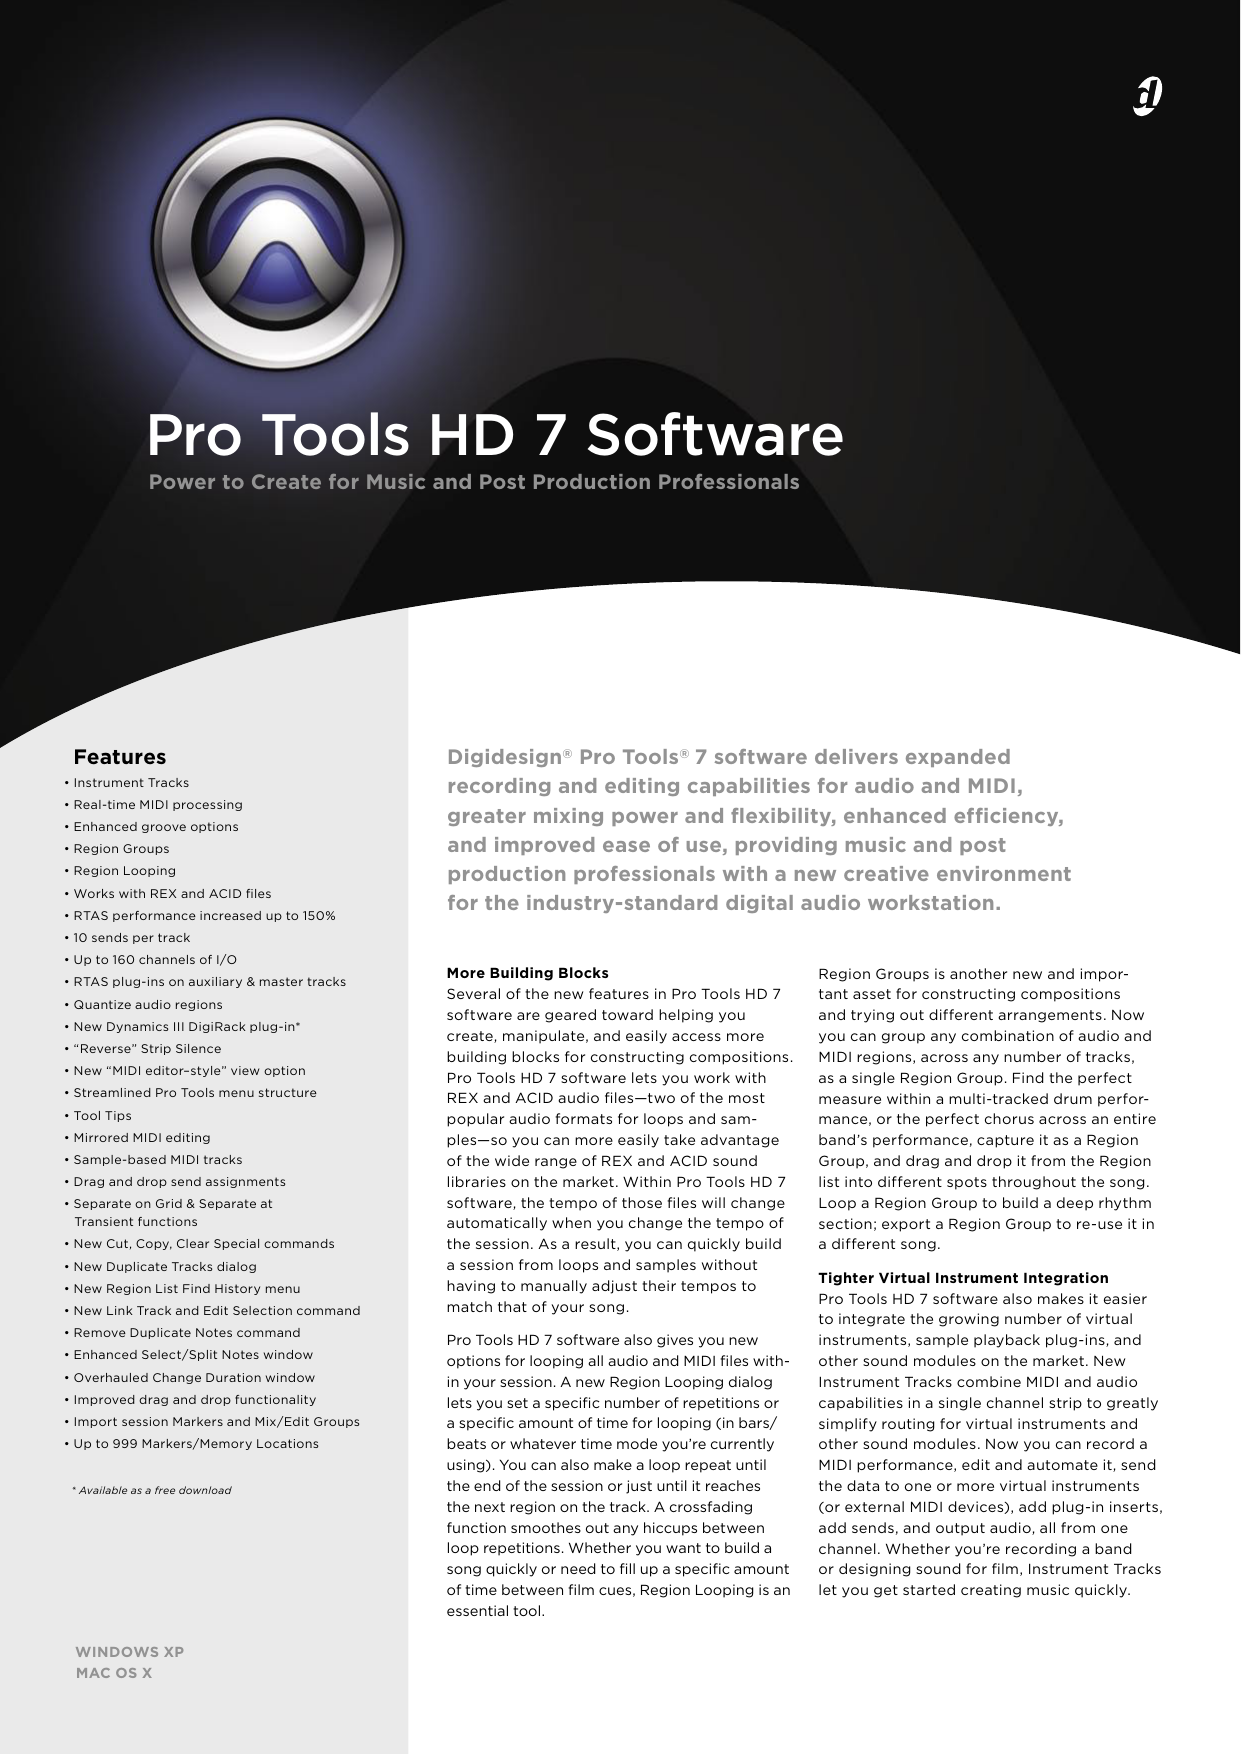 Pro tools 7 download mac free 2018